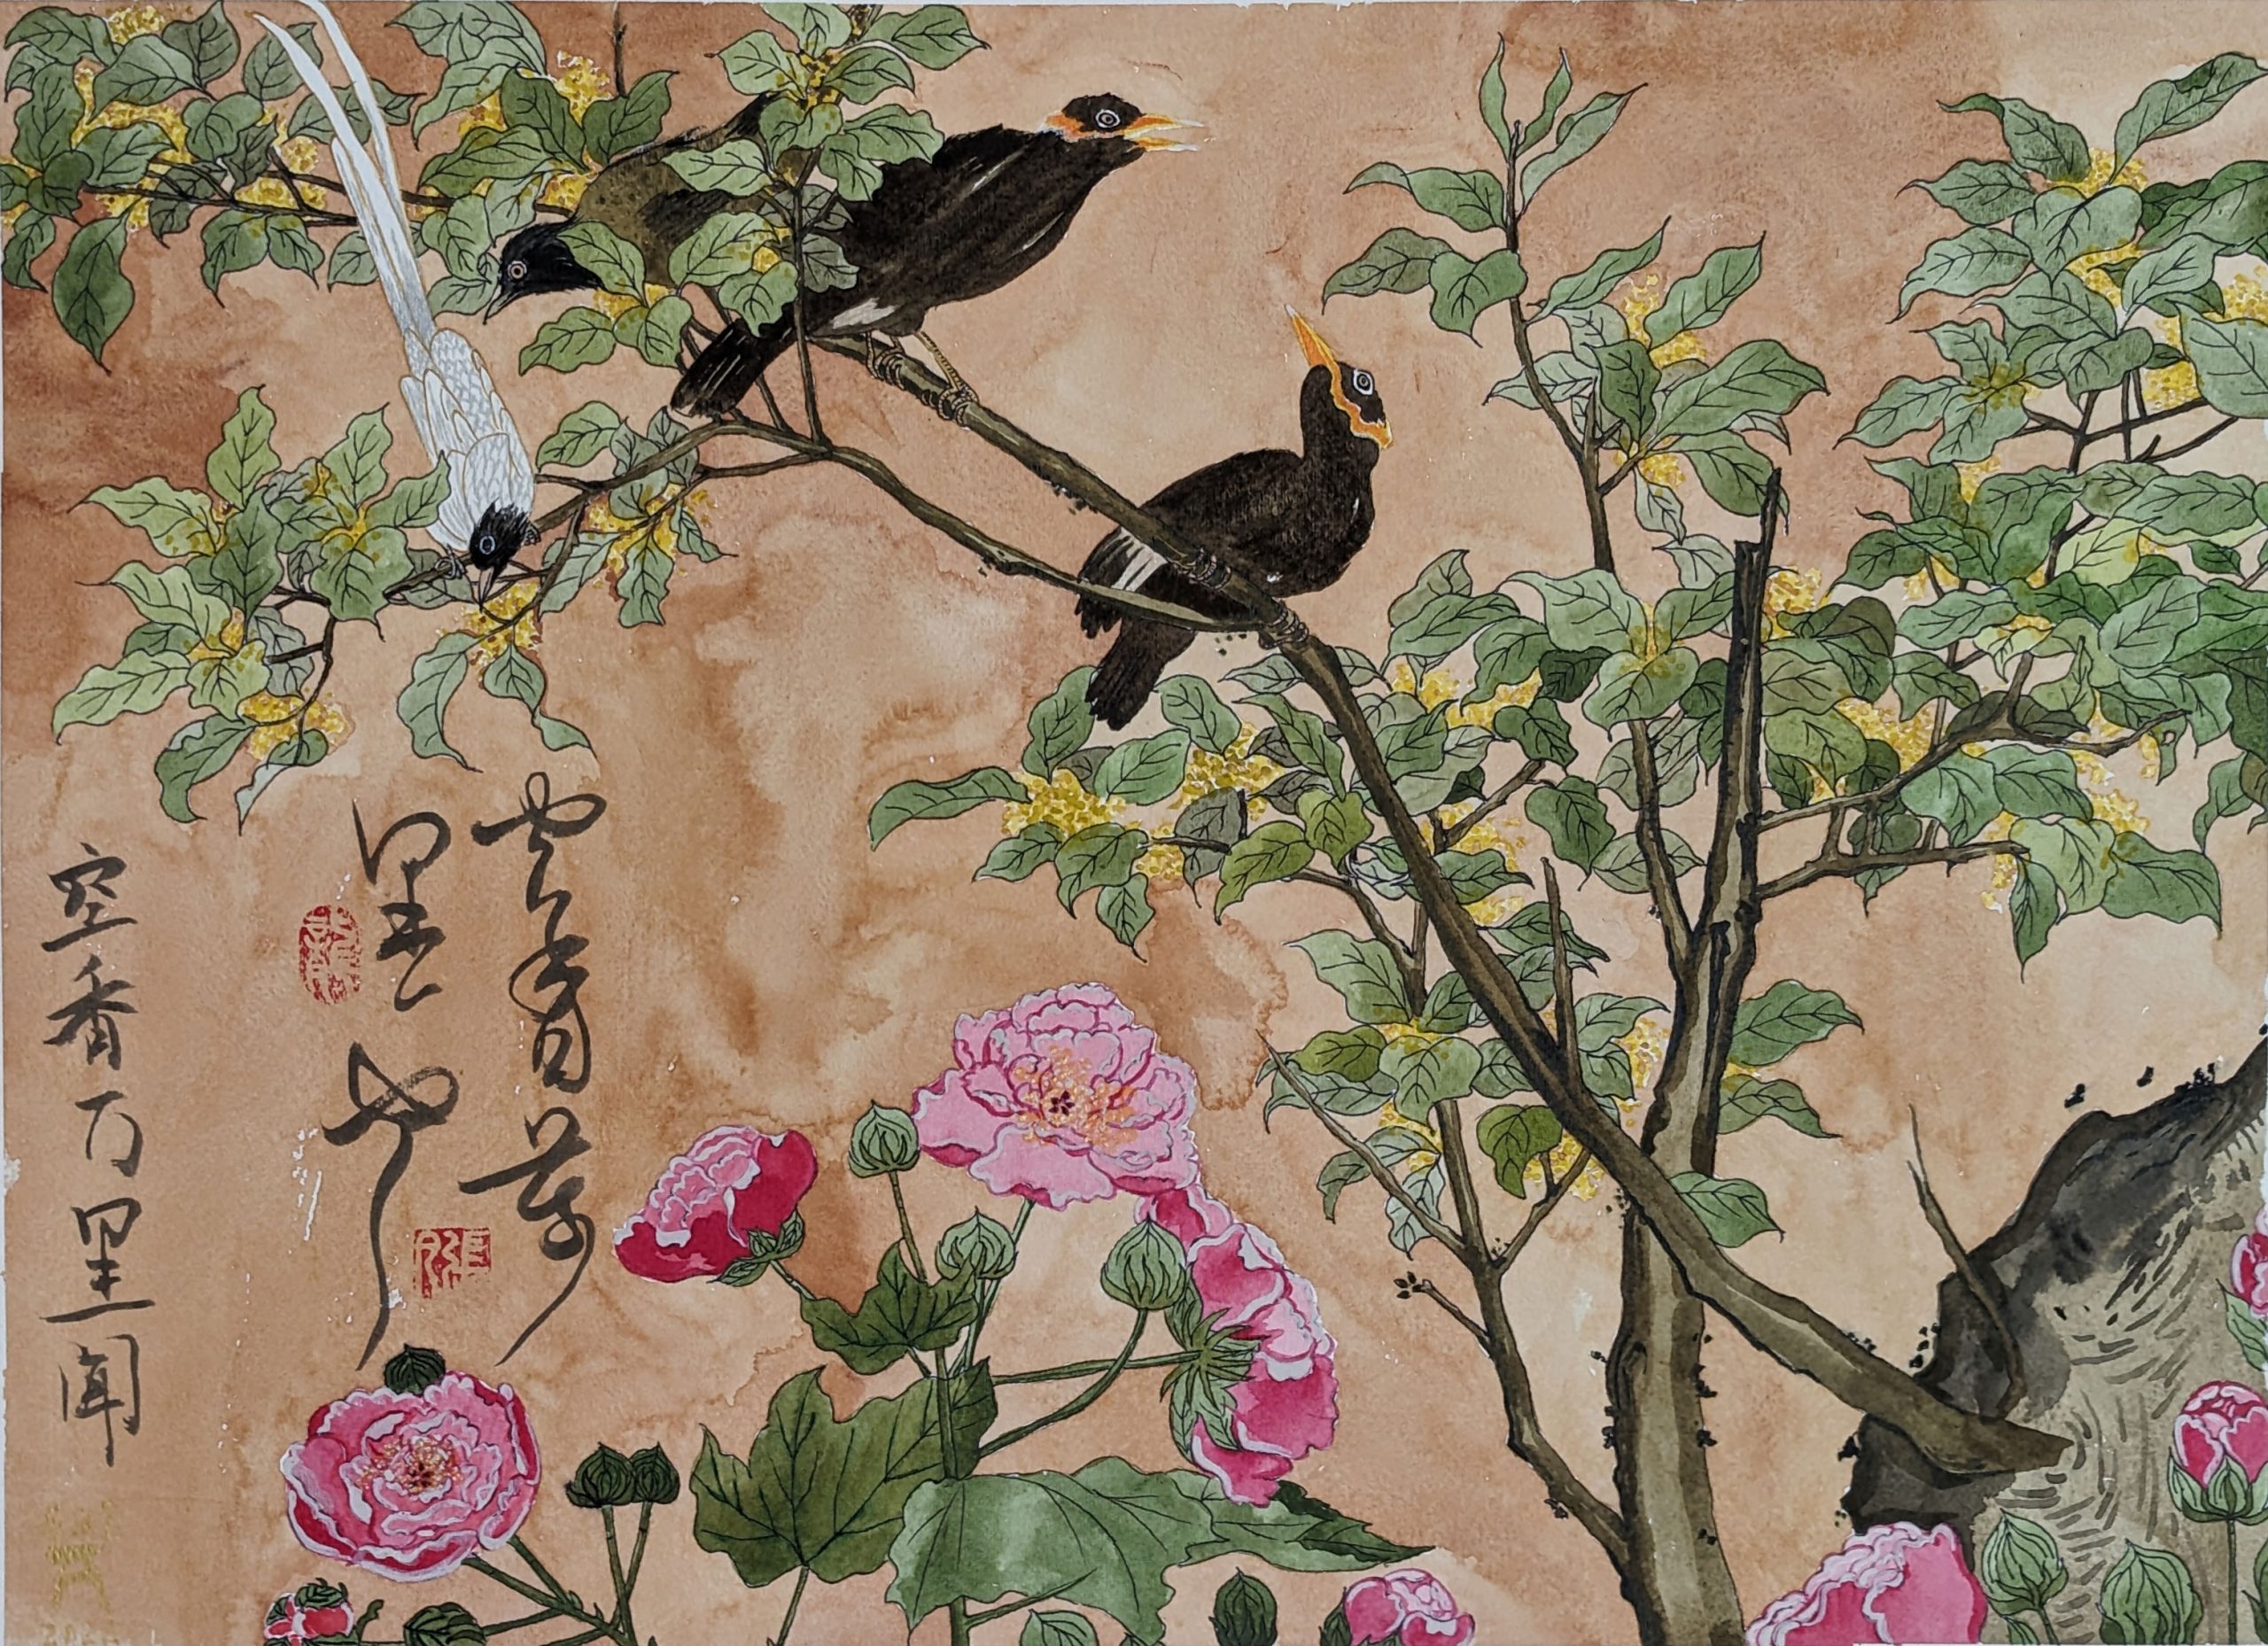 Four Seasons Flowers and Birds - Autumn, Ming Dynasty Lu Ji (吕纪)